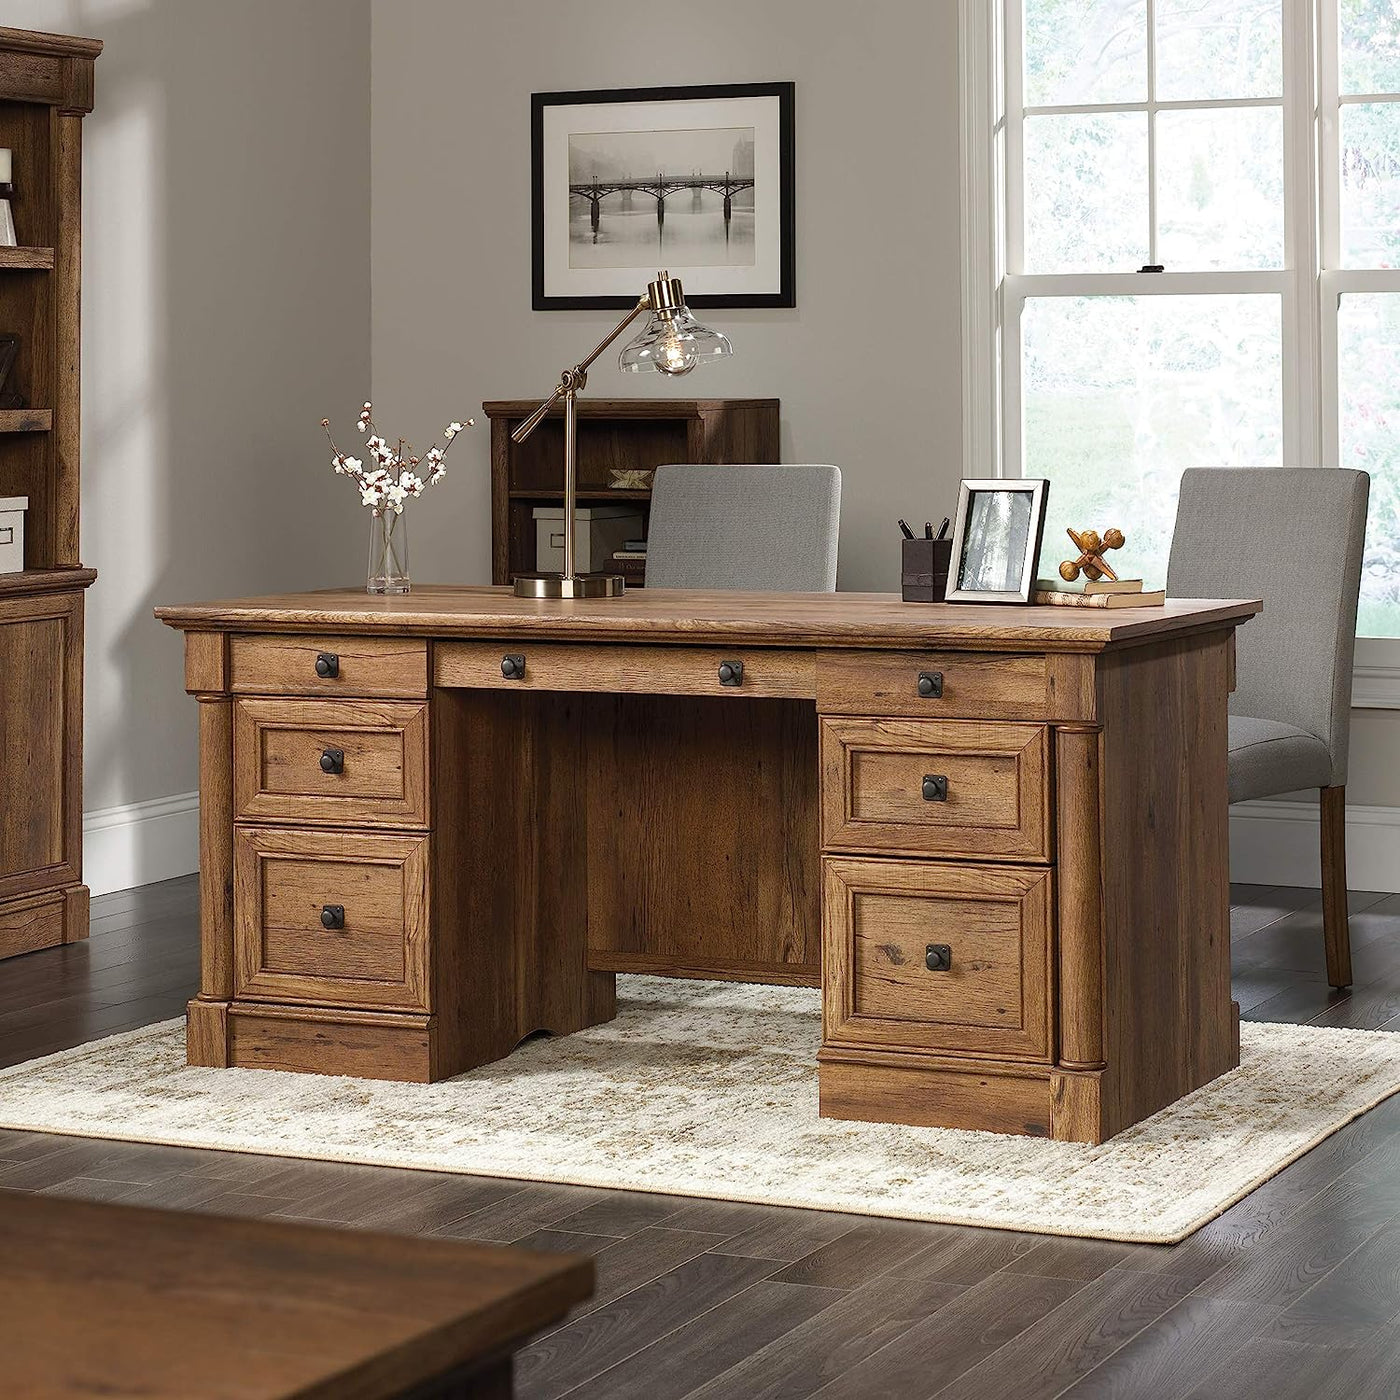 Sauder Palladia Executive Desk, Vintage Oak finish (2 Boxes) - $480